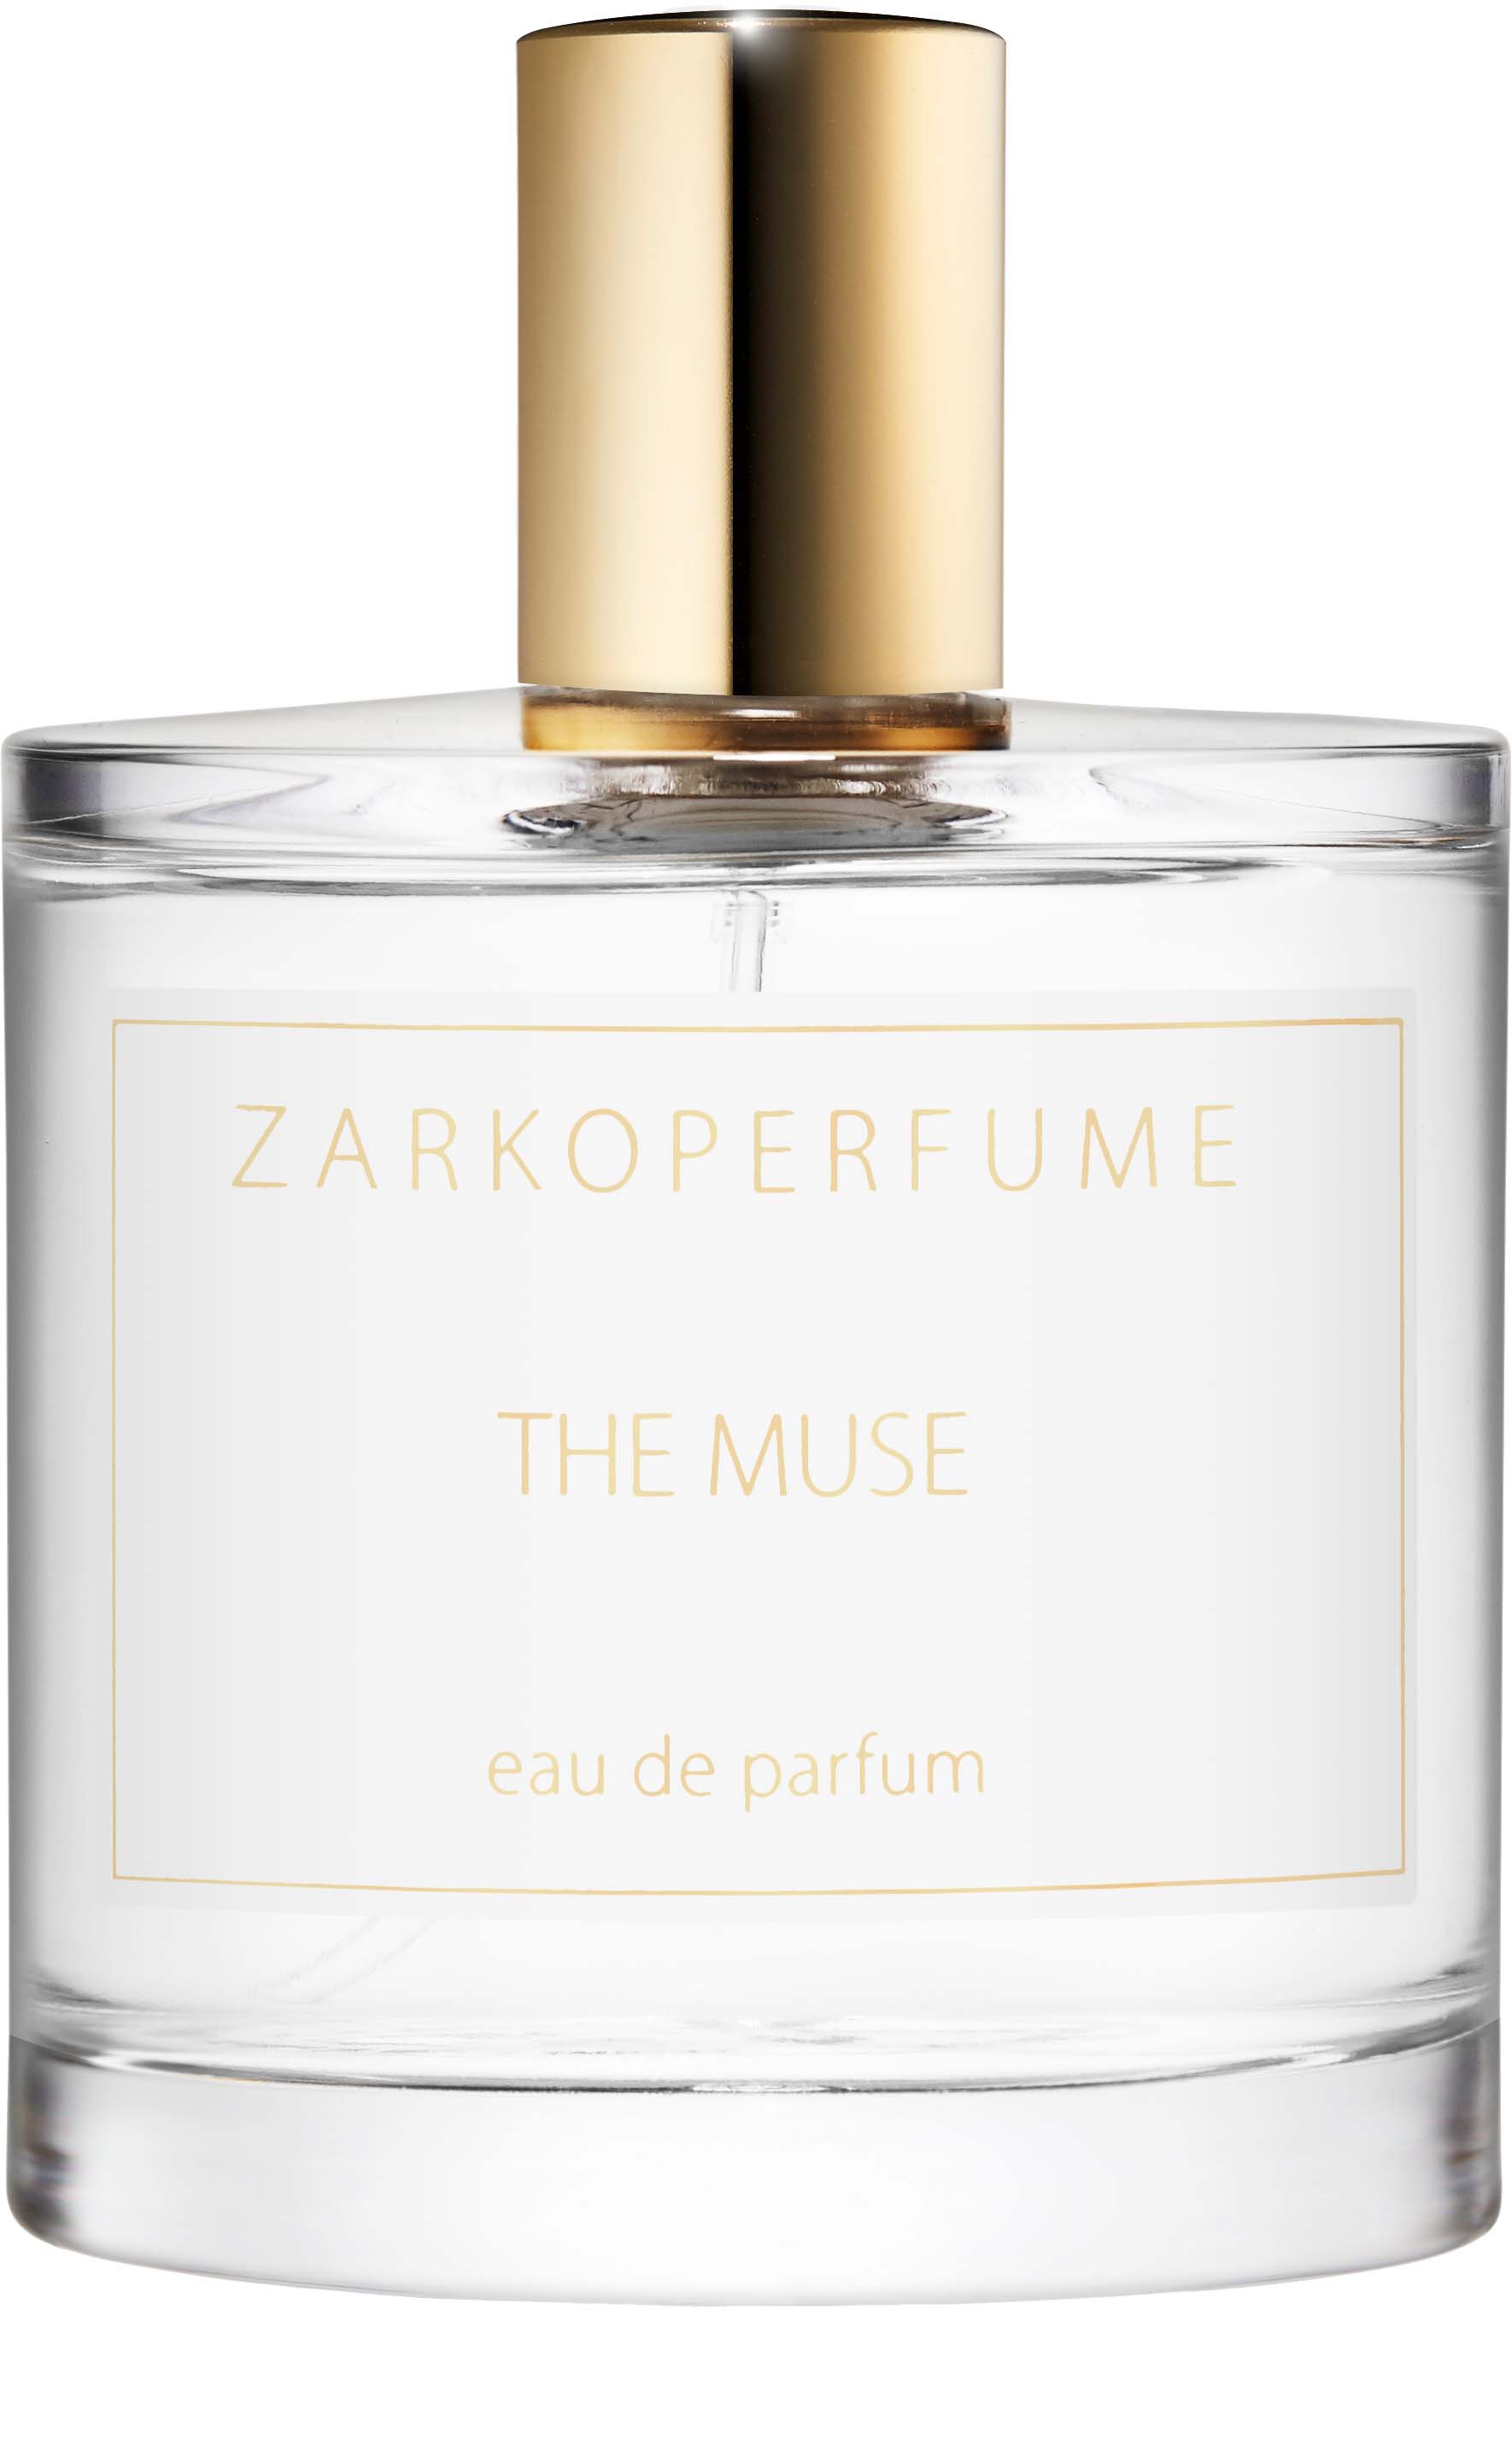 zarkoperfume the muse